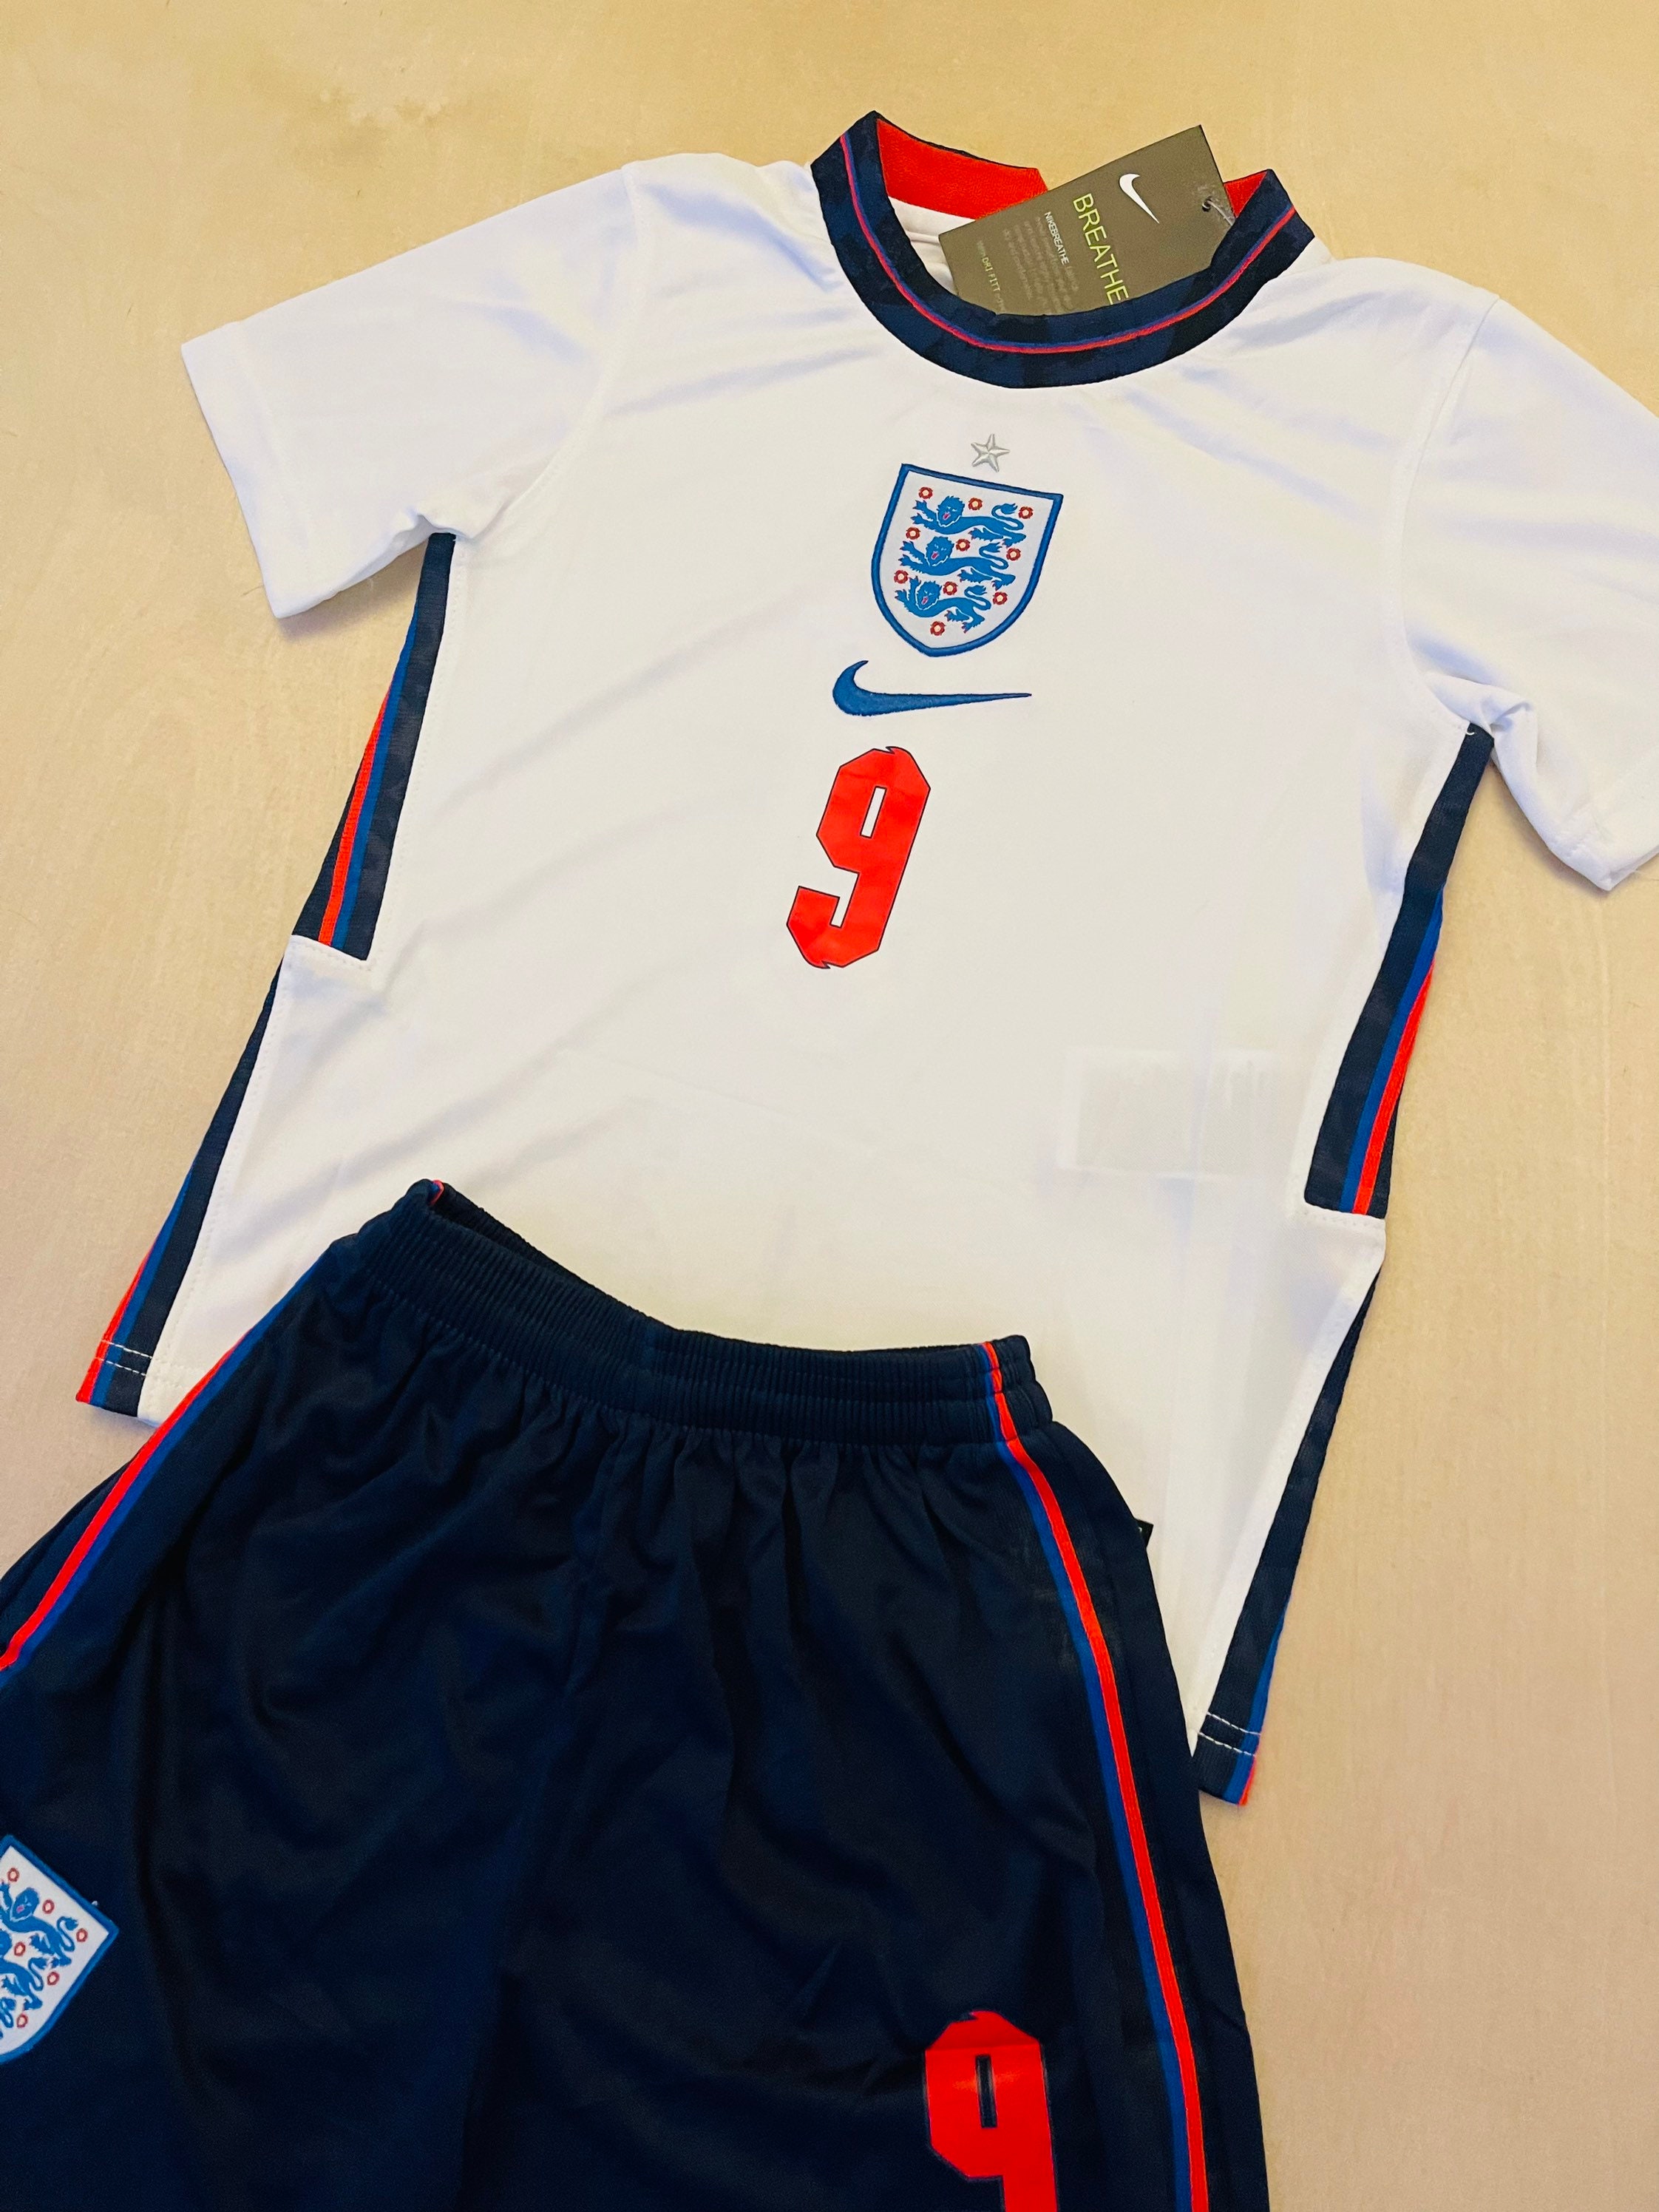 Harry Kane 9 England youth soccer jersey set for kids | Etsy